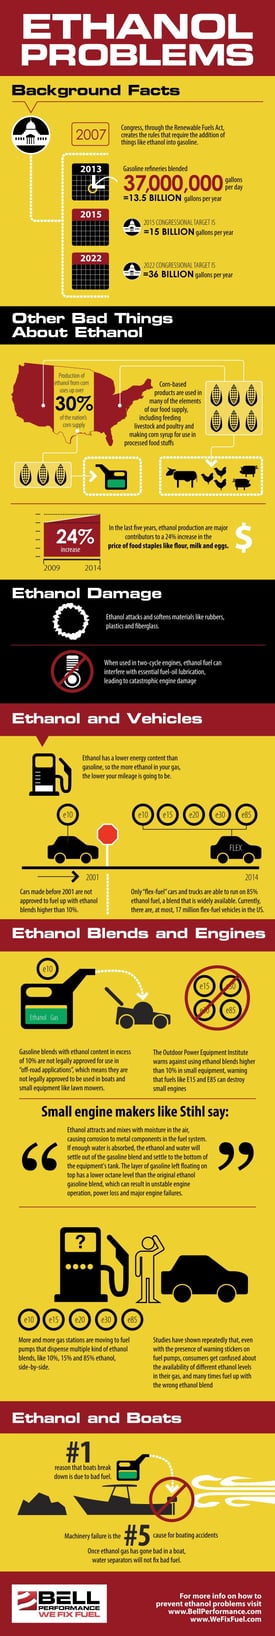 ethanol-history